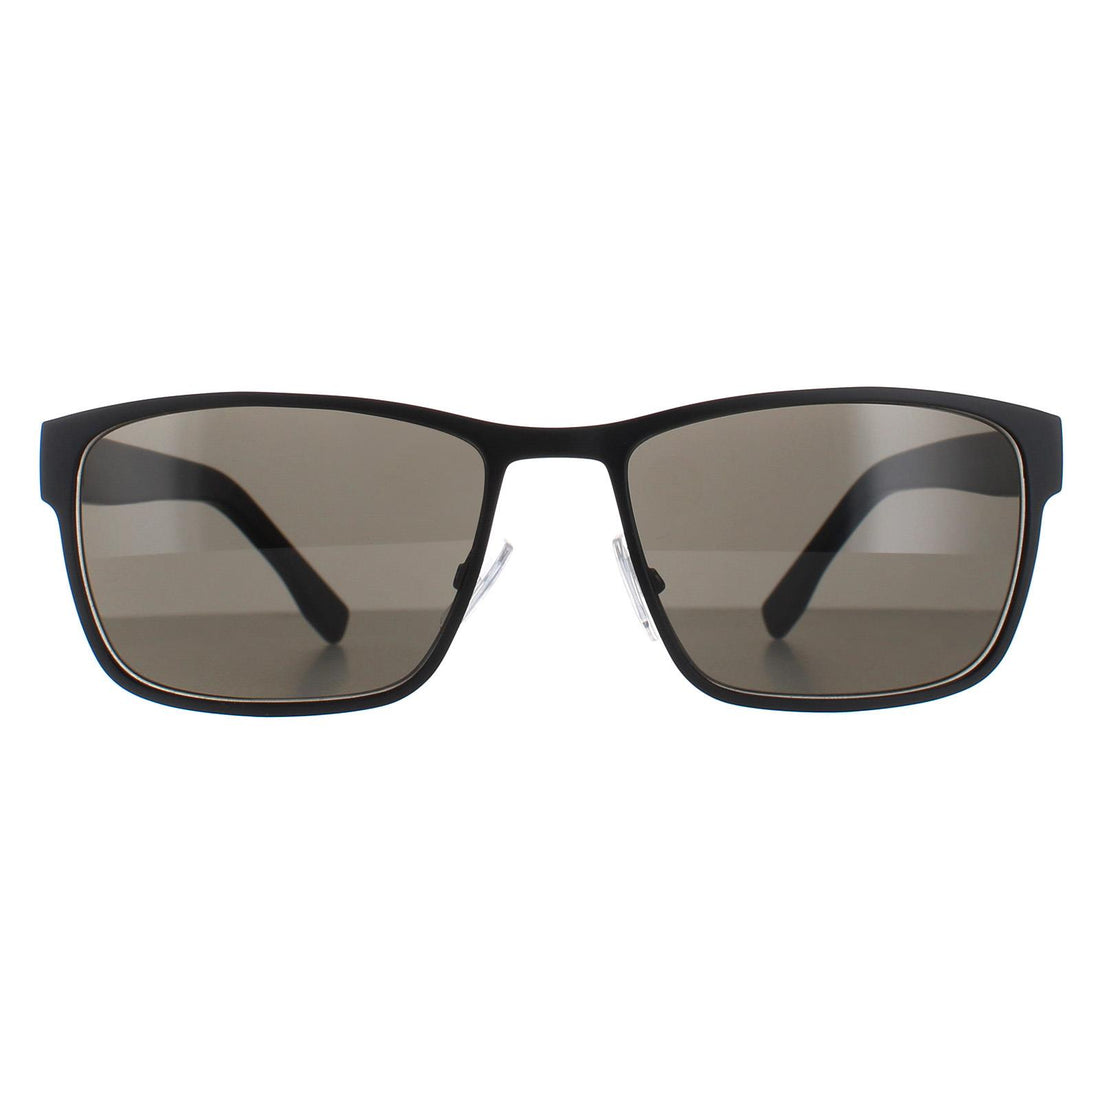 Hugo Boss 0561 Sunglasses Matte Black Grey